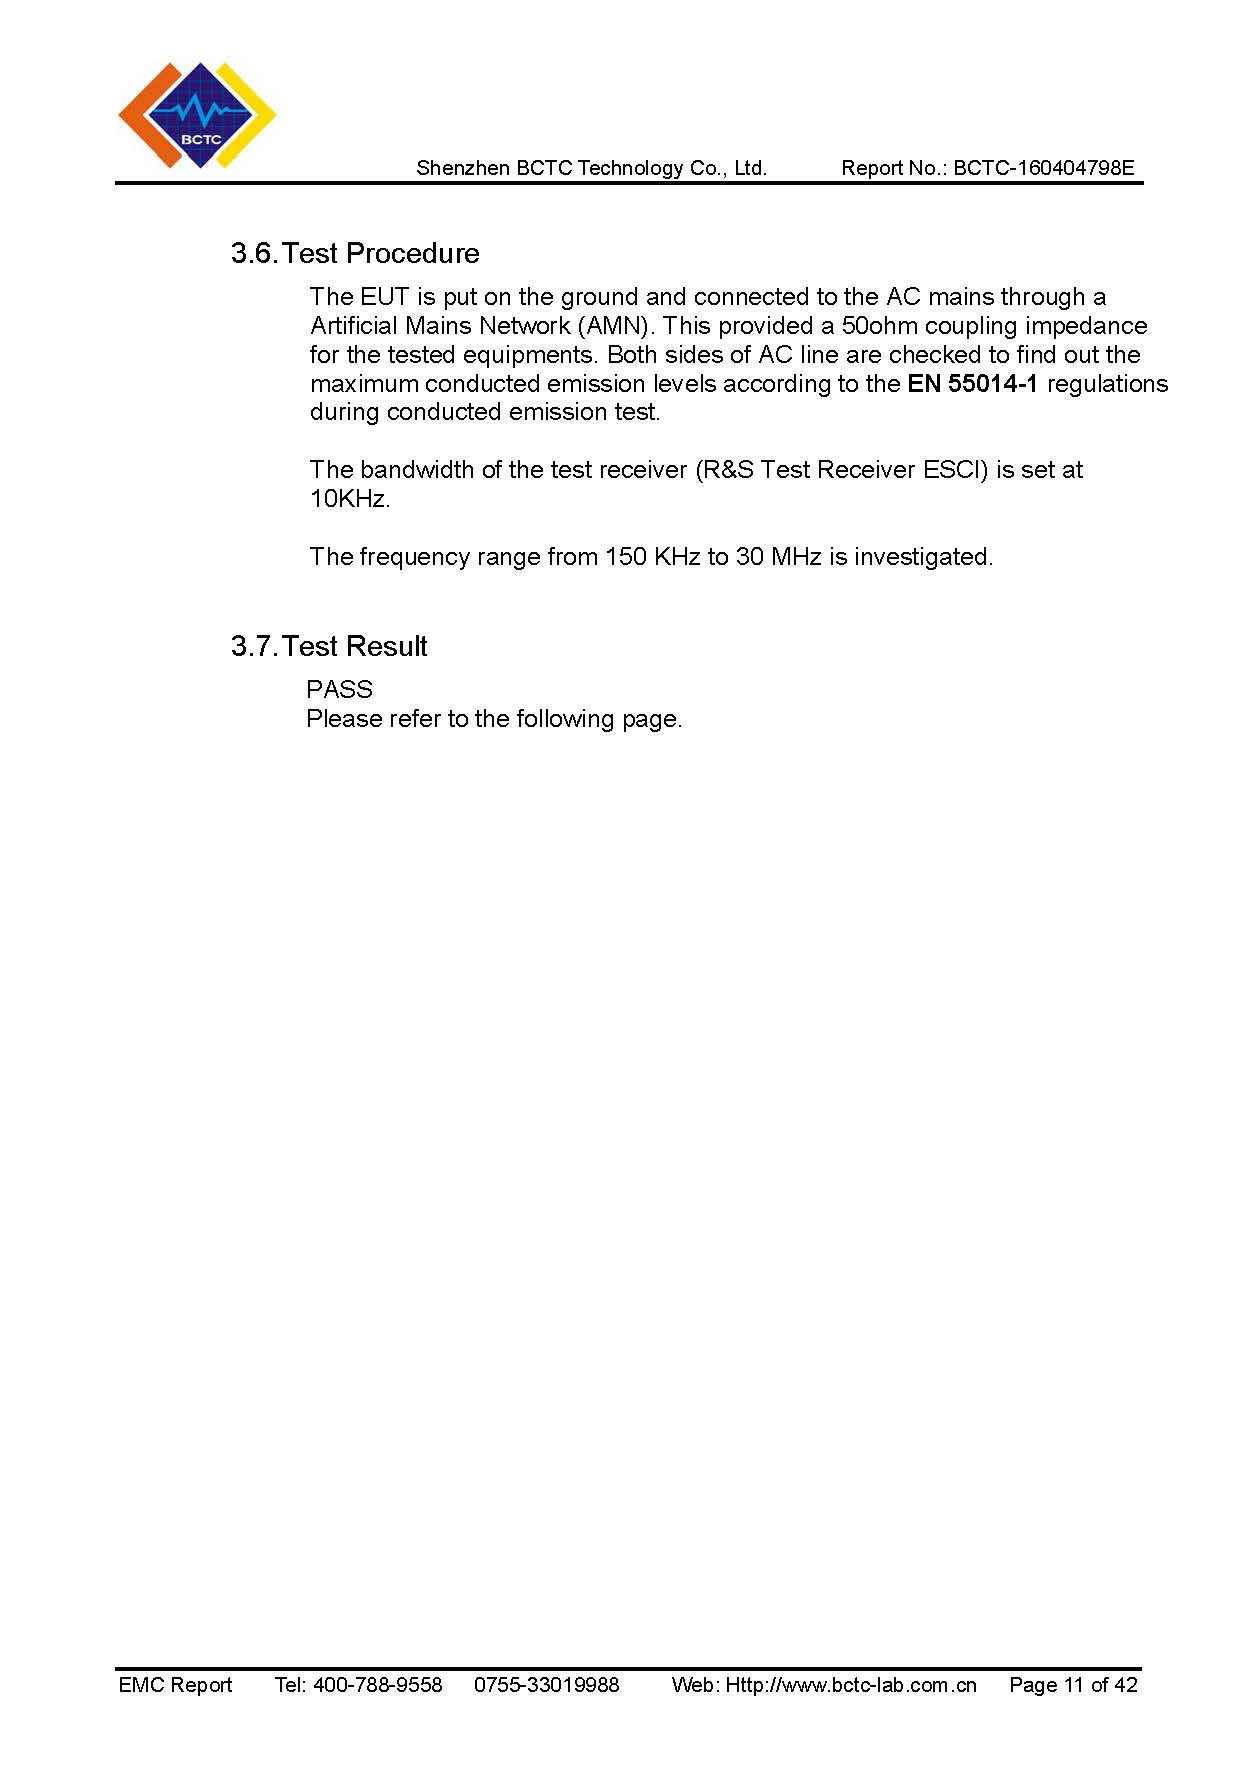 Tri-Oxy FRESH EMC Report Page 11